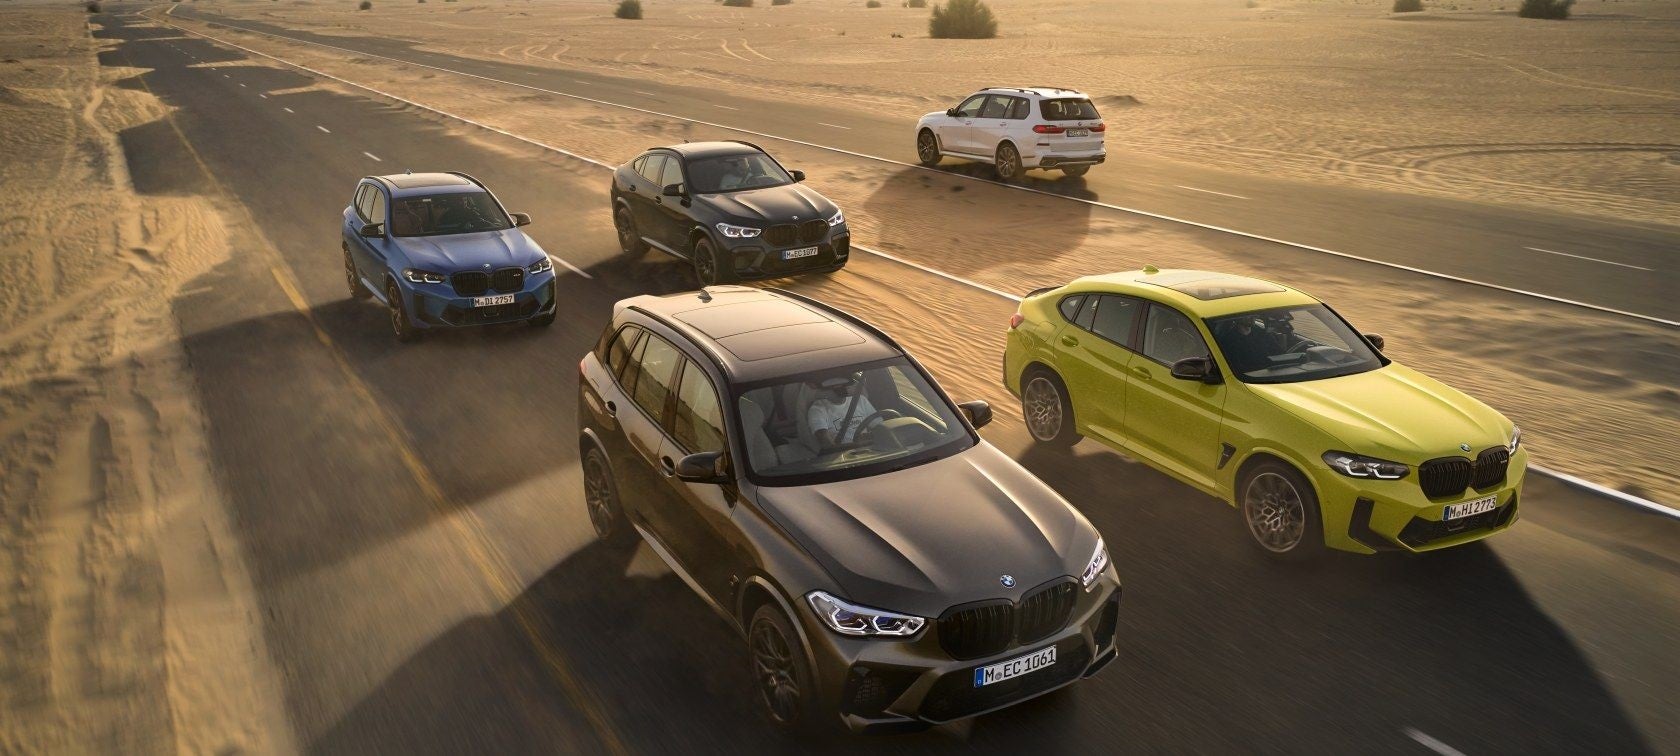 BMW M Series Models